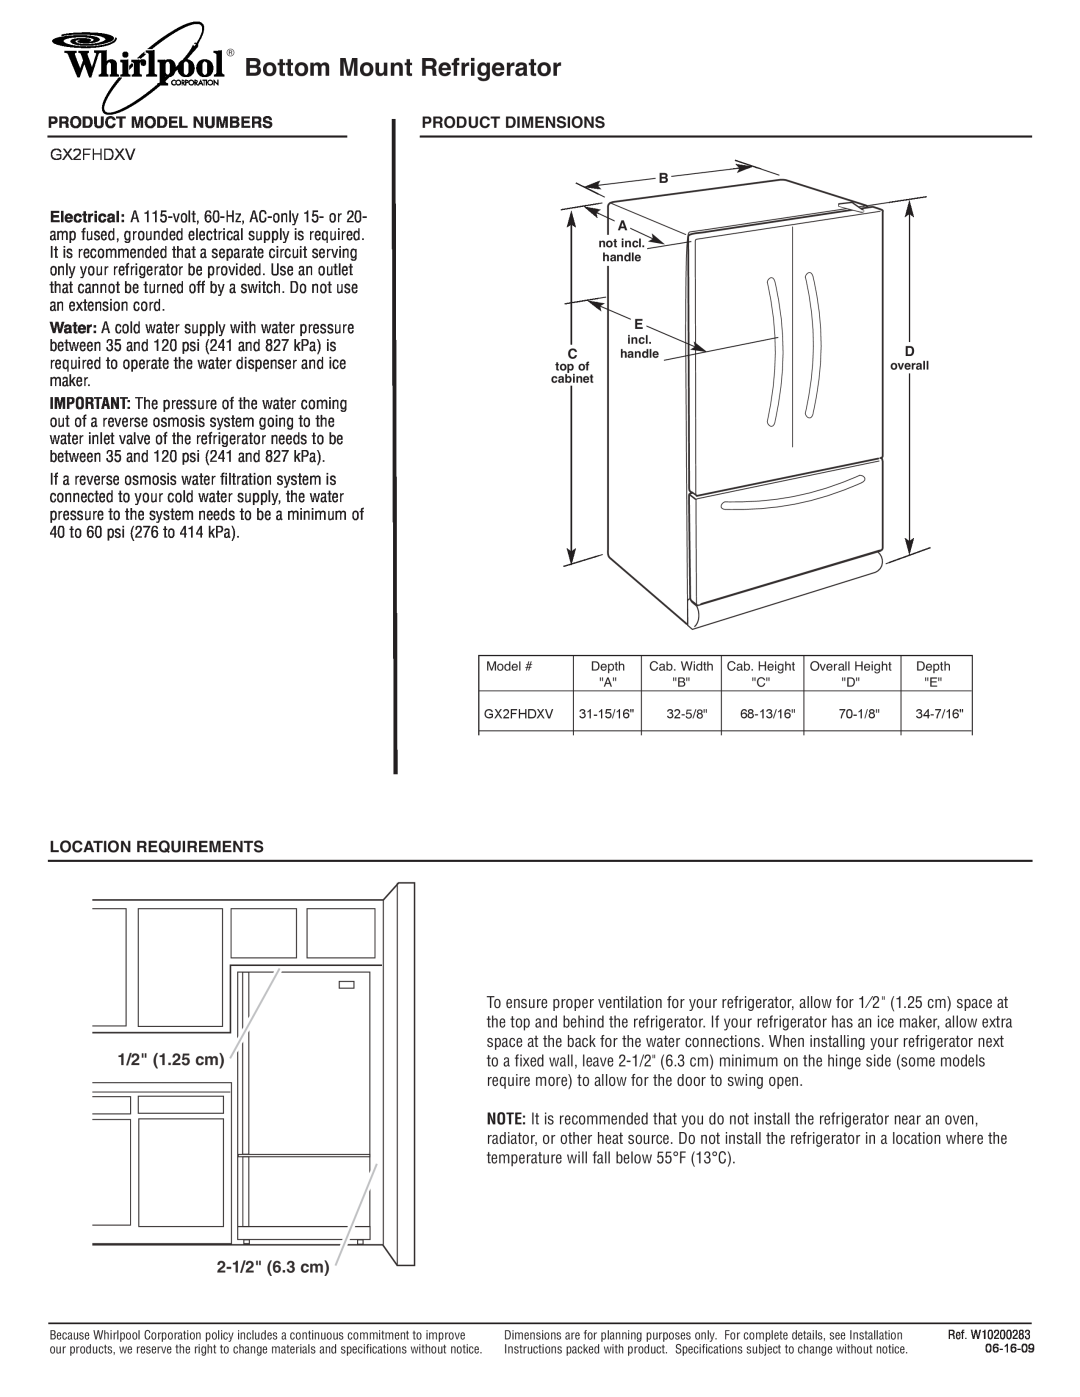 Whirlpool W10200283, GX2FHDXV dimensions Bottom Mount Refrigerator, 1/2 1.25 cm, 2-1/2 6.3 cm, Product Model Numbers 